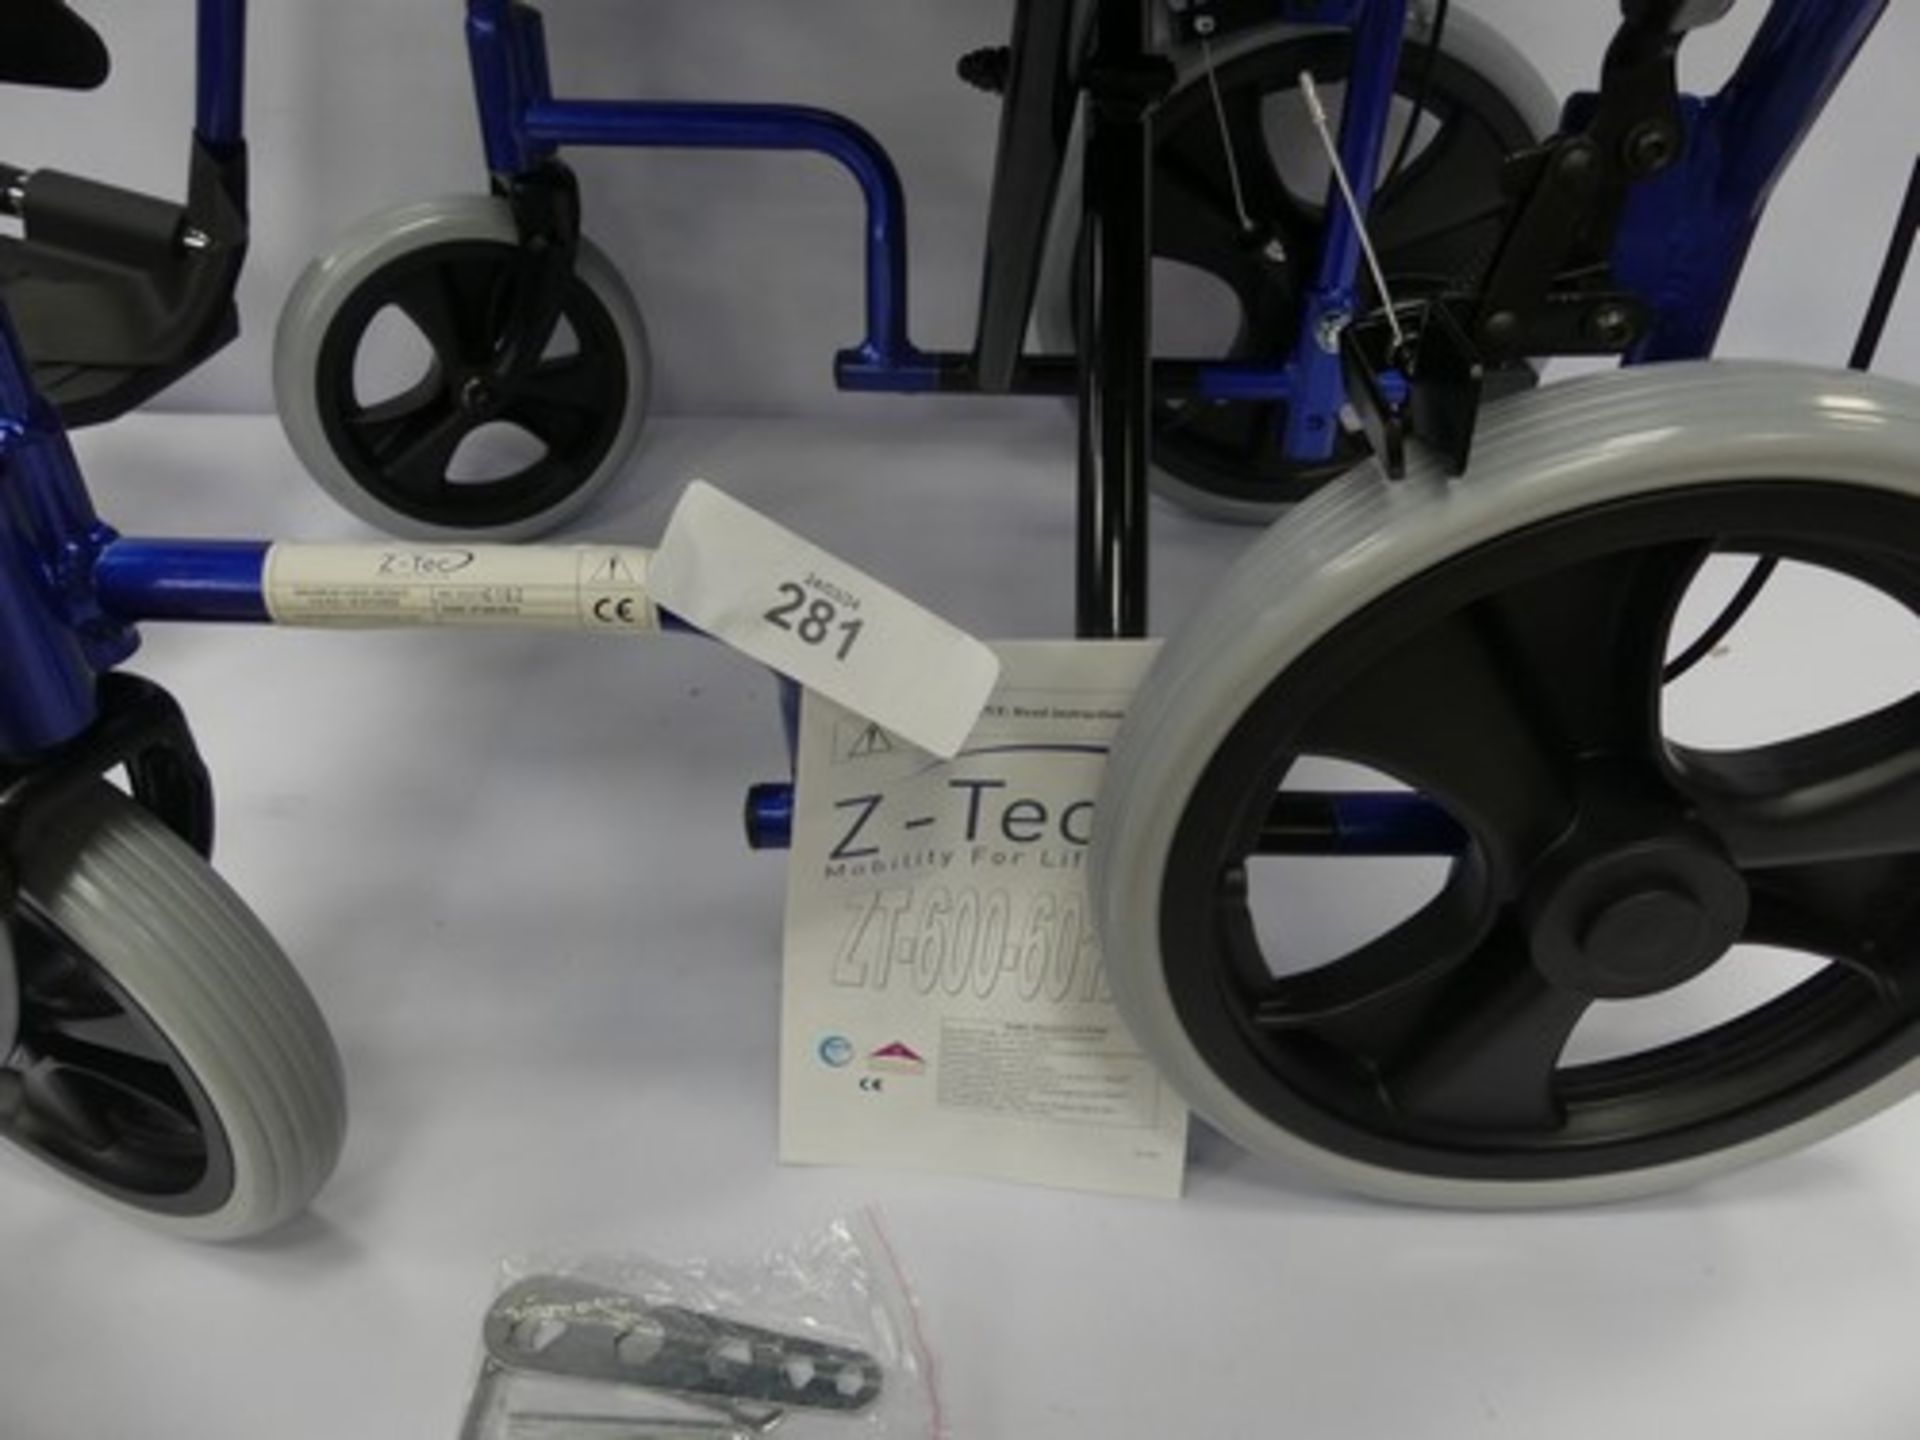 1 x Z-Tec wheelchair, model: ZT-600-601X - new in tatty box (GS33) - Image 6 of 6